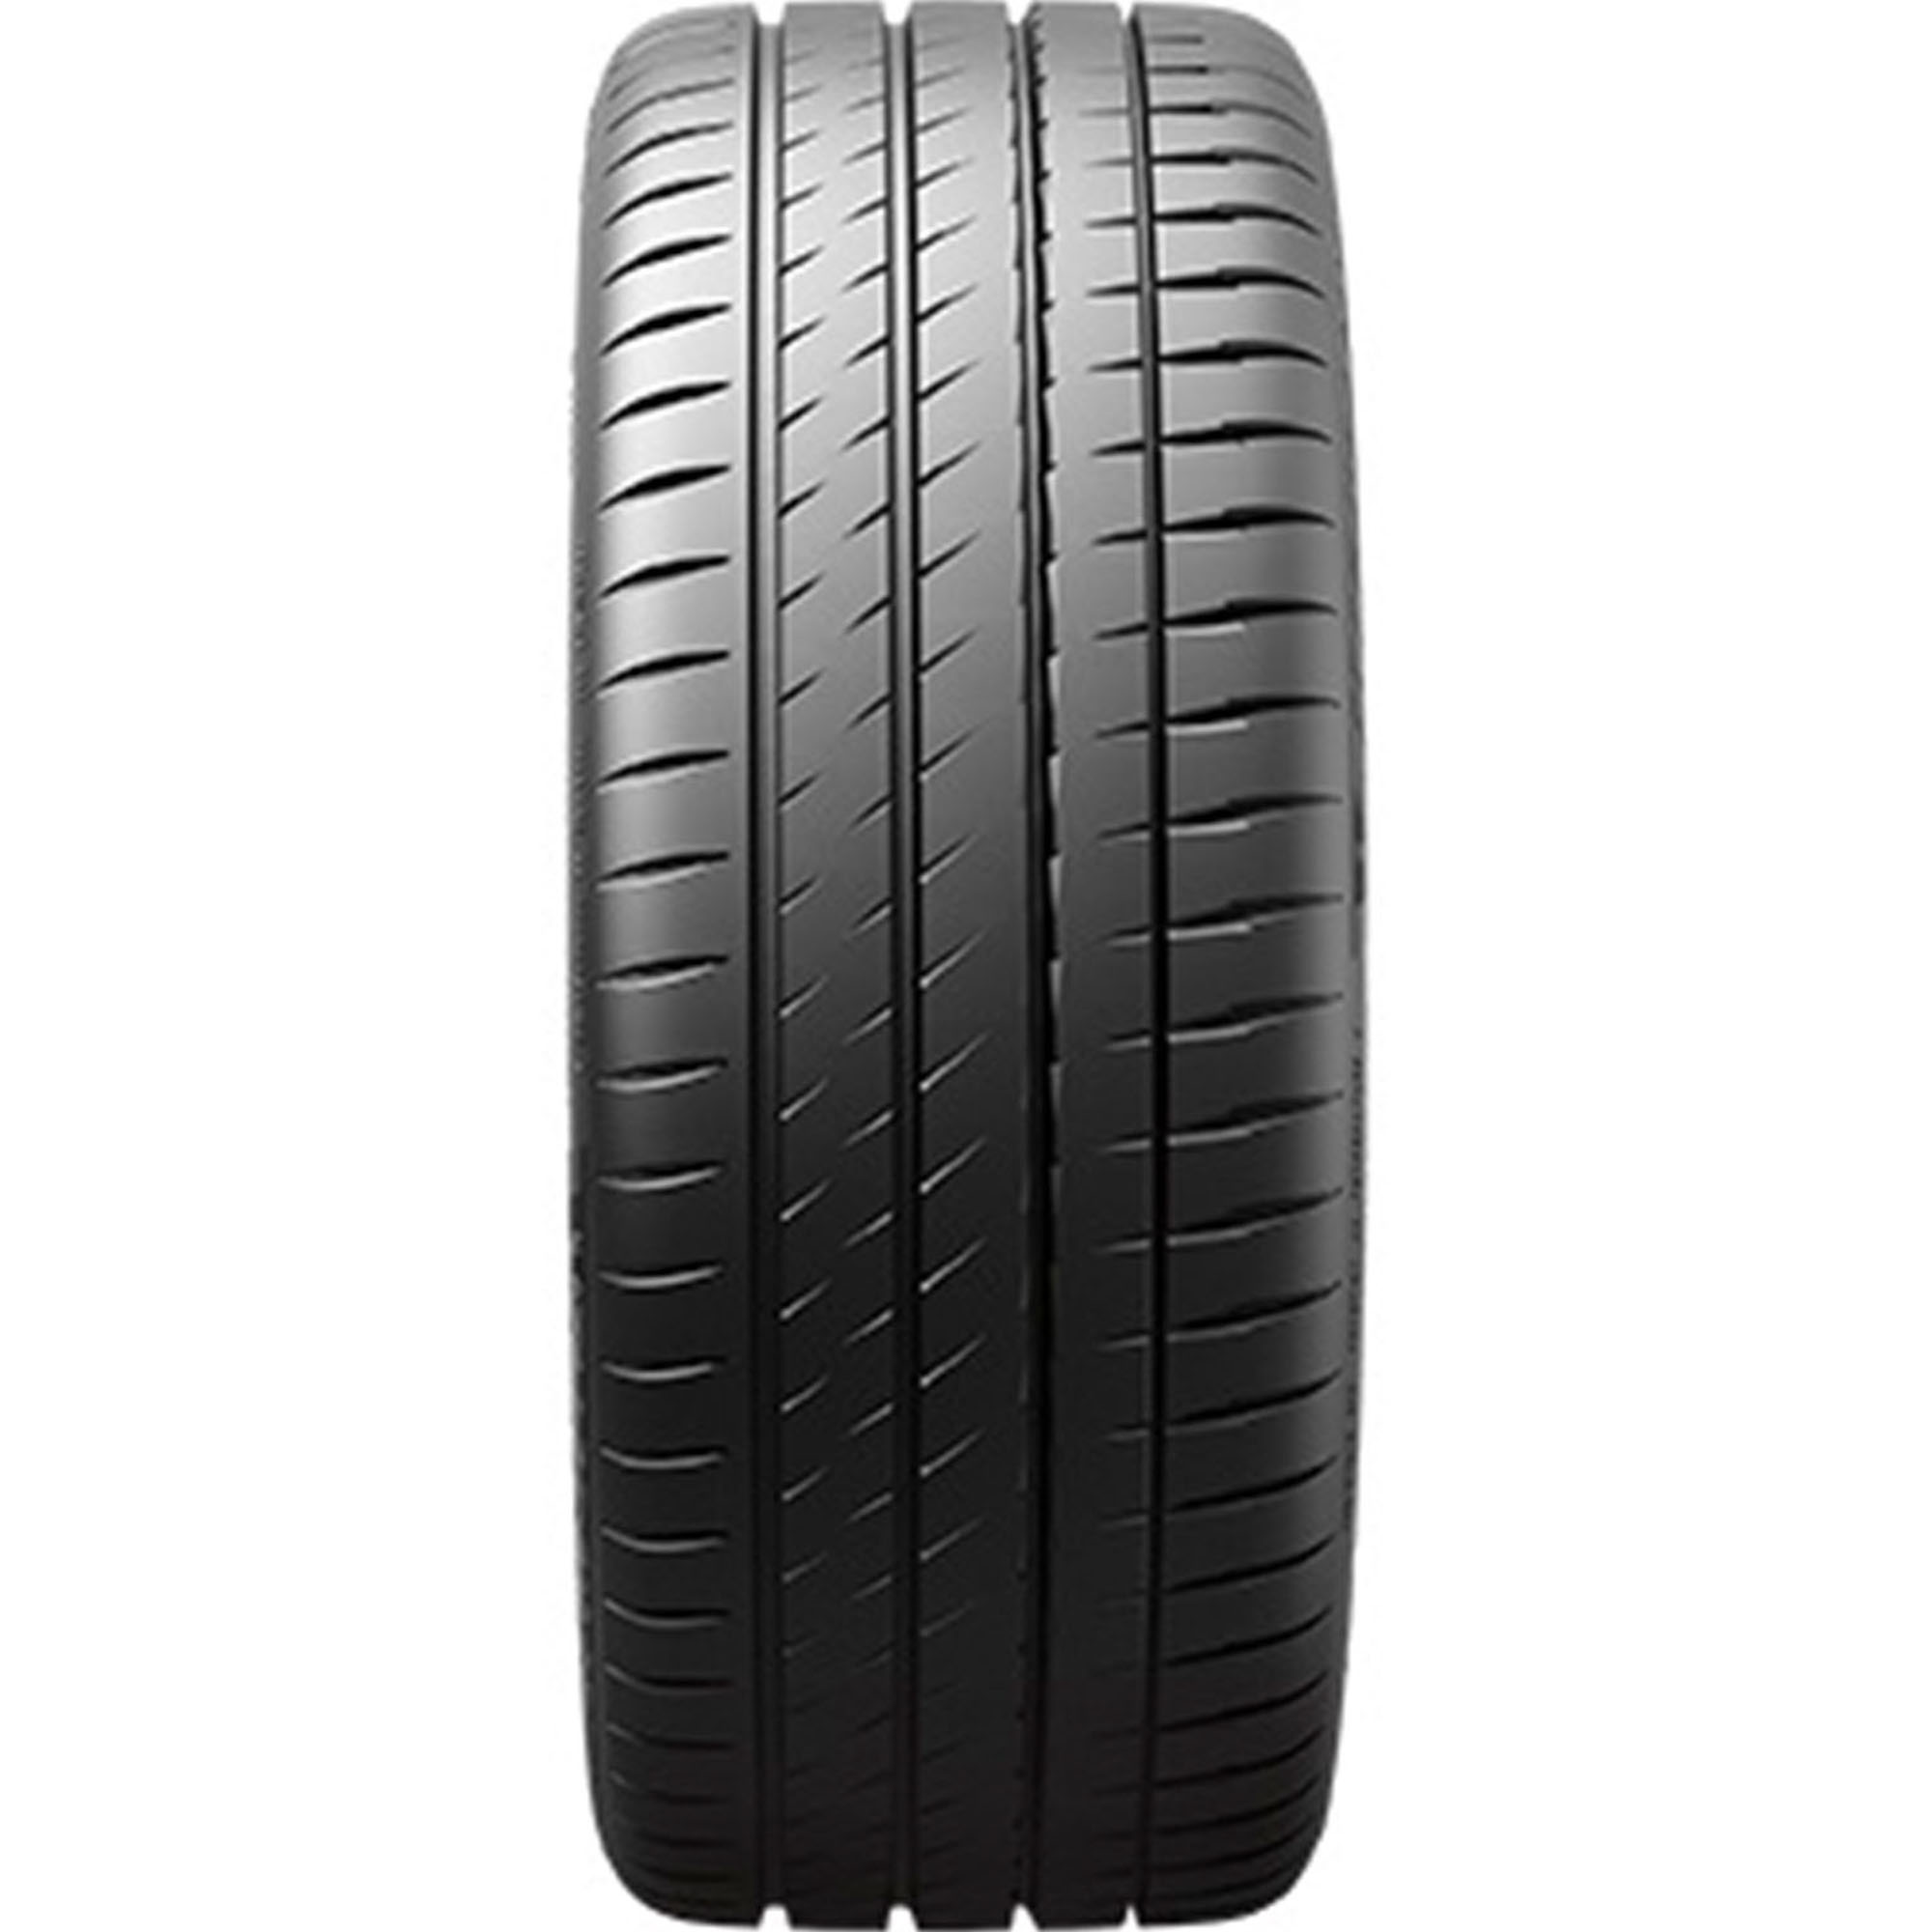 Michelin Pilot Sport 4S Performance 235/35ZR19 (91Y) XL Passenger Tire - image 3 of 4